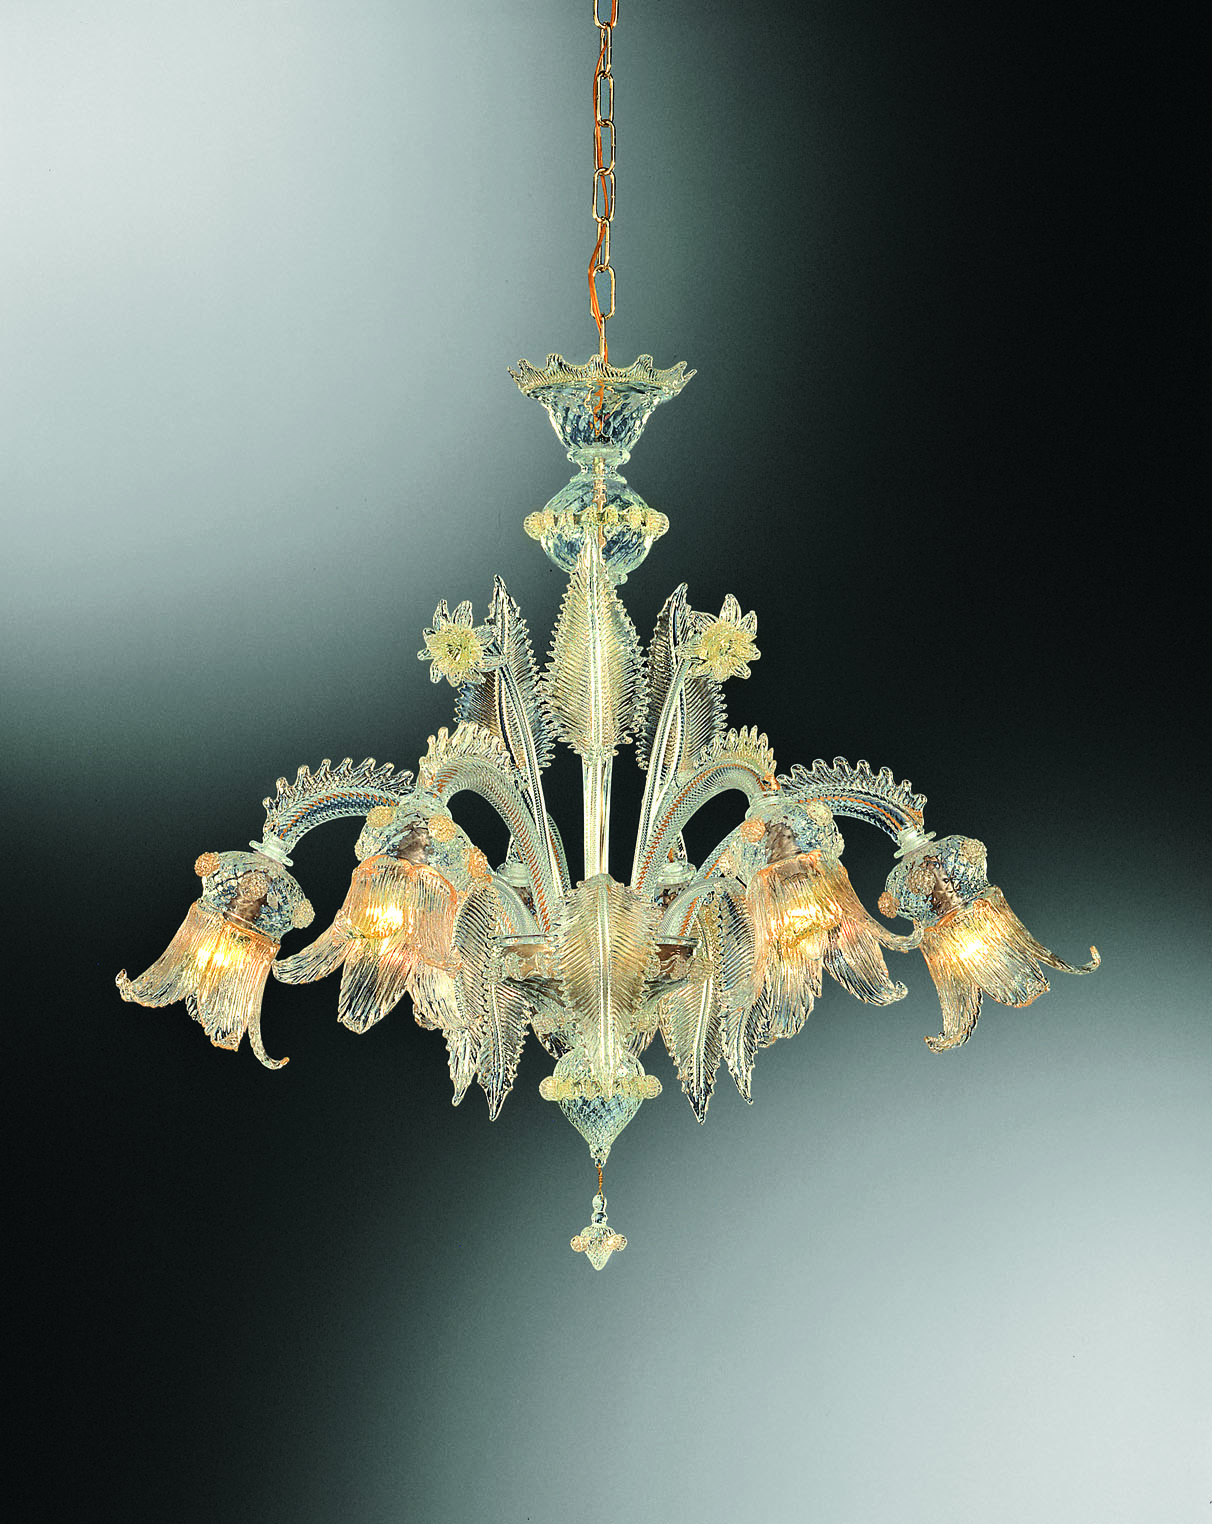 Venetian Glass Chandelier “Greci” With 6 Lights